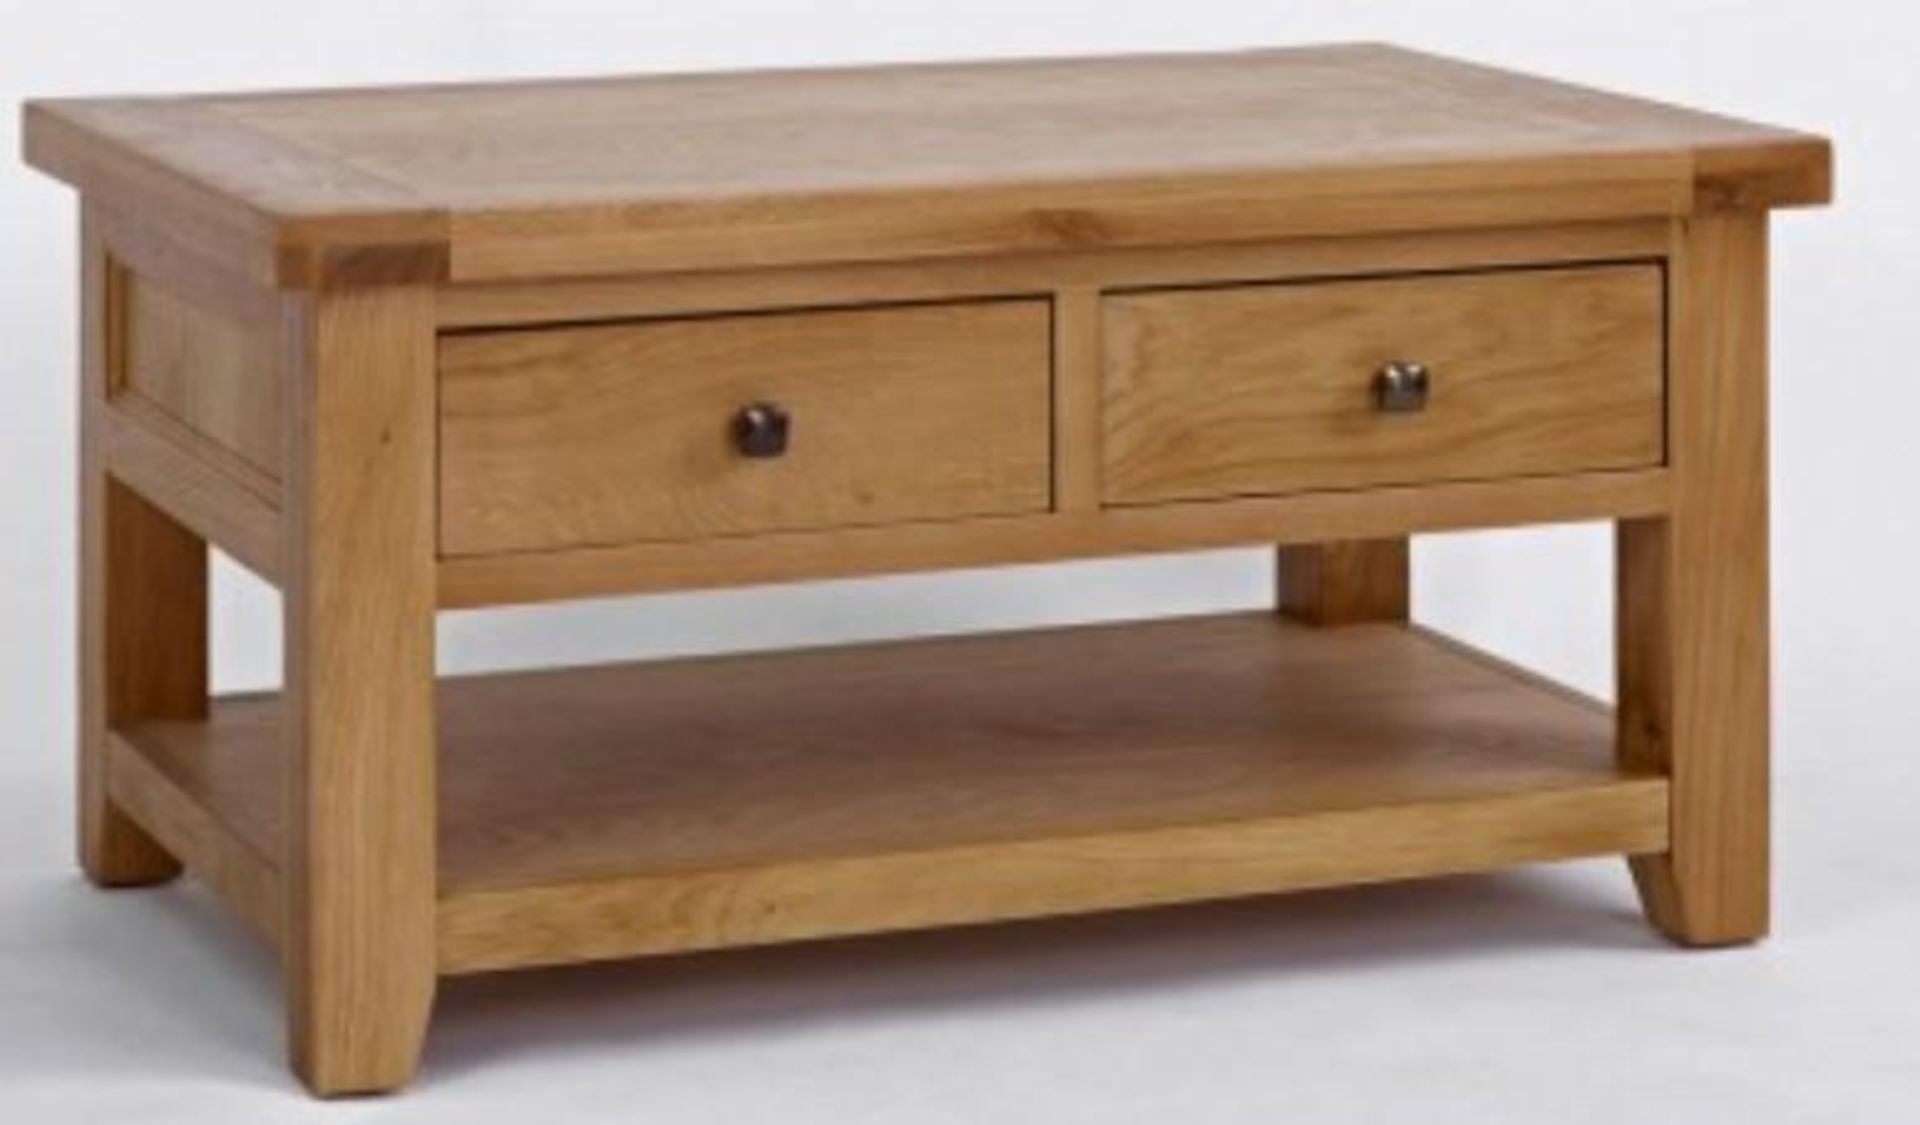 BRAND NEW & BOXED Devon oak coffee table 2 drawers